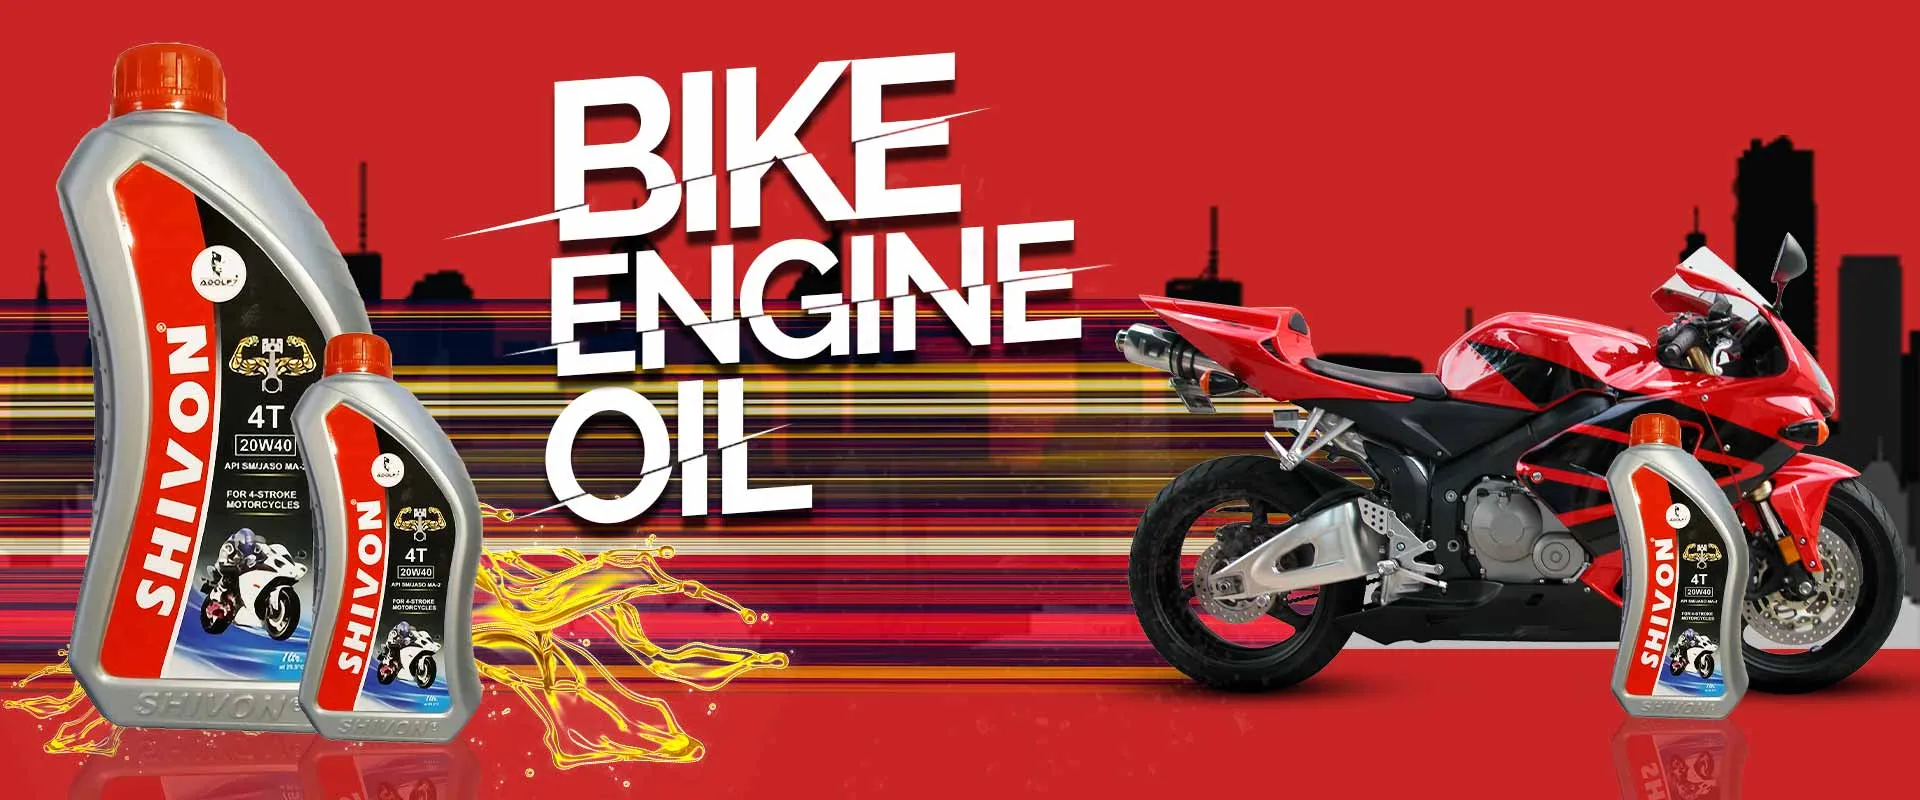 Bike Engine Oil In Vettaikaranpudur